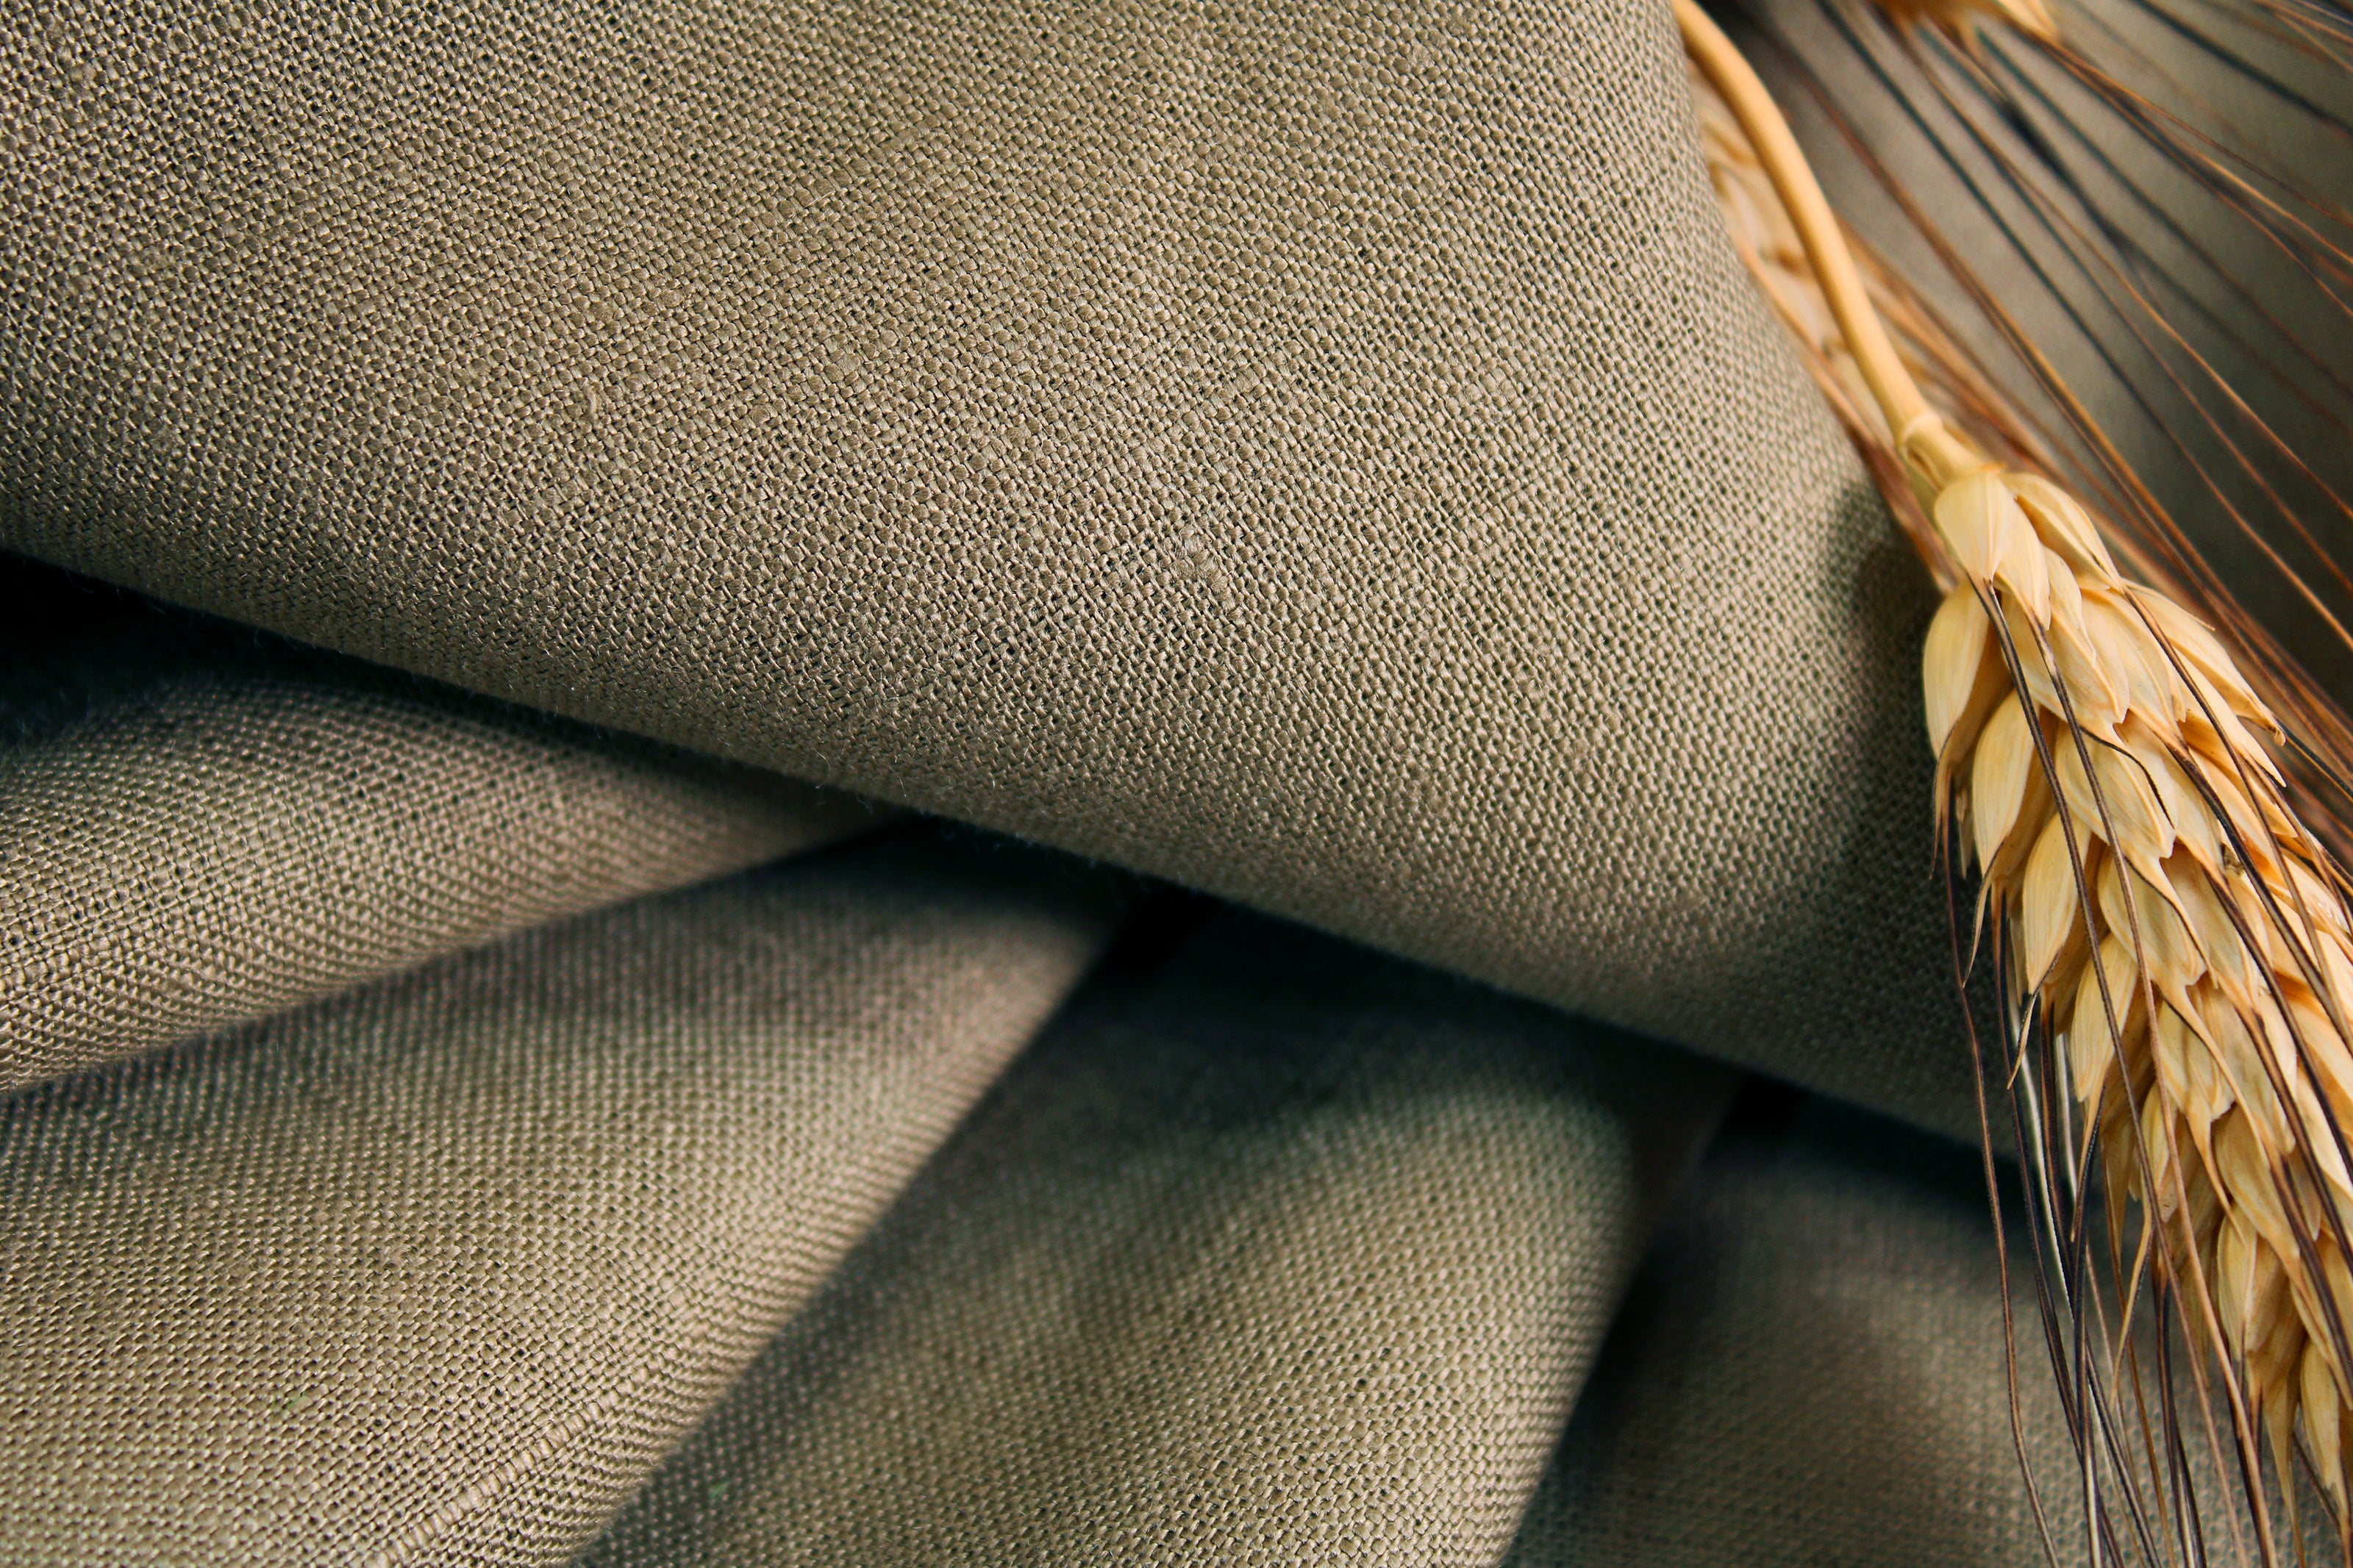 Premium IRISH 100% Linen Fabric by the Yard / Latte taupe Linen Fabric / Buy Linen Online